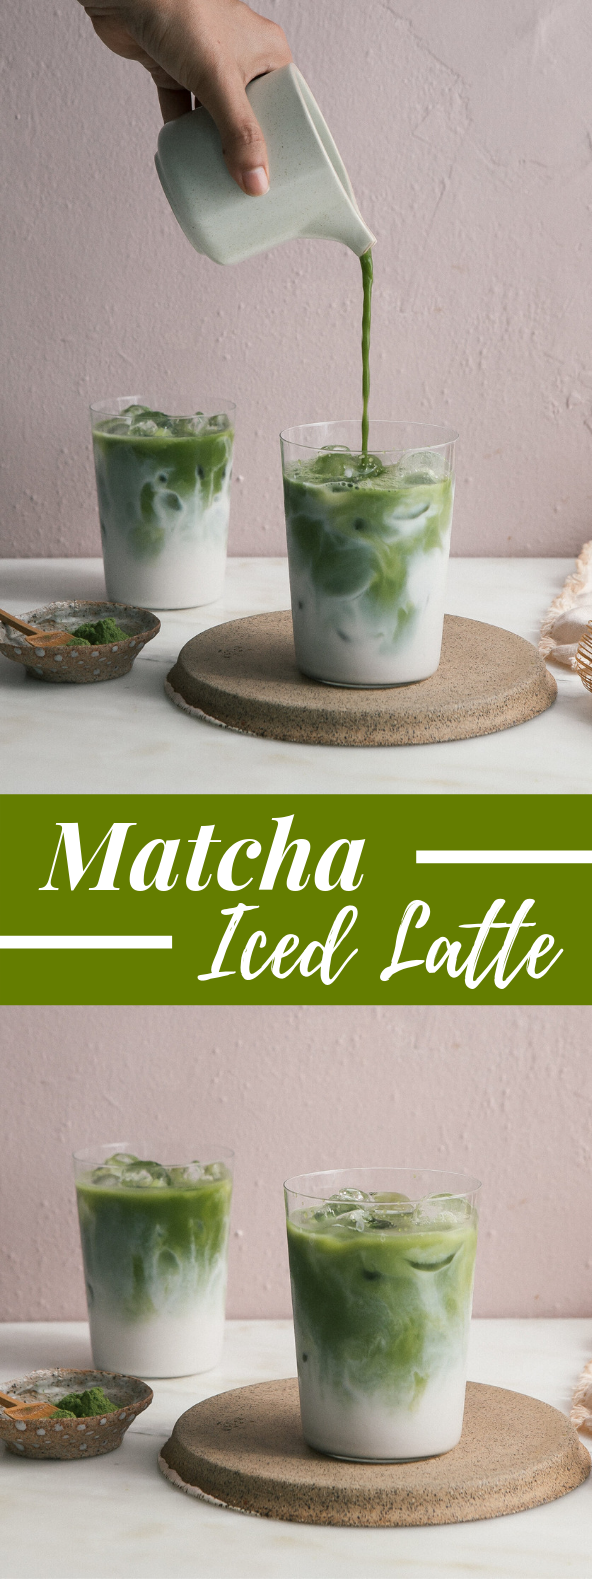 MATCHA ICED LATTE #drinks #matchalatte